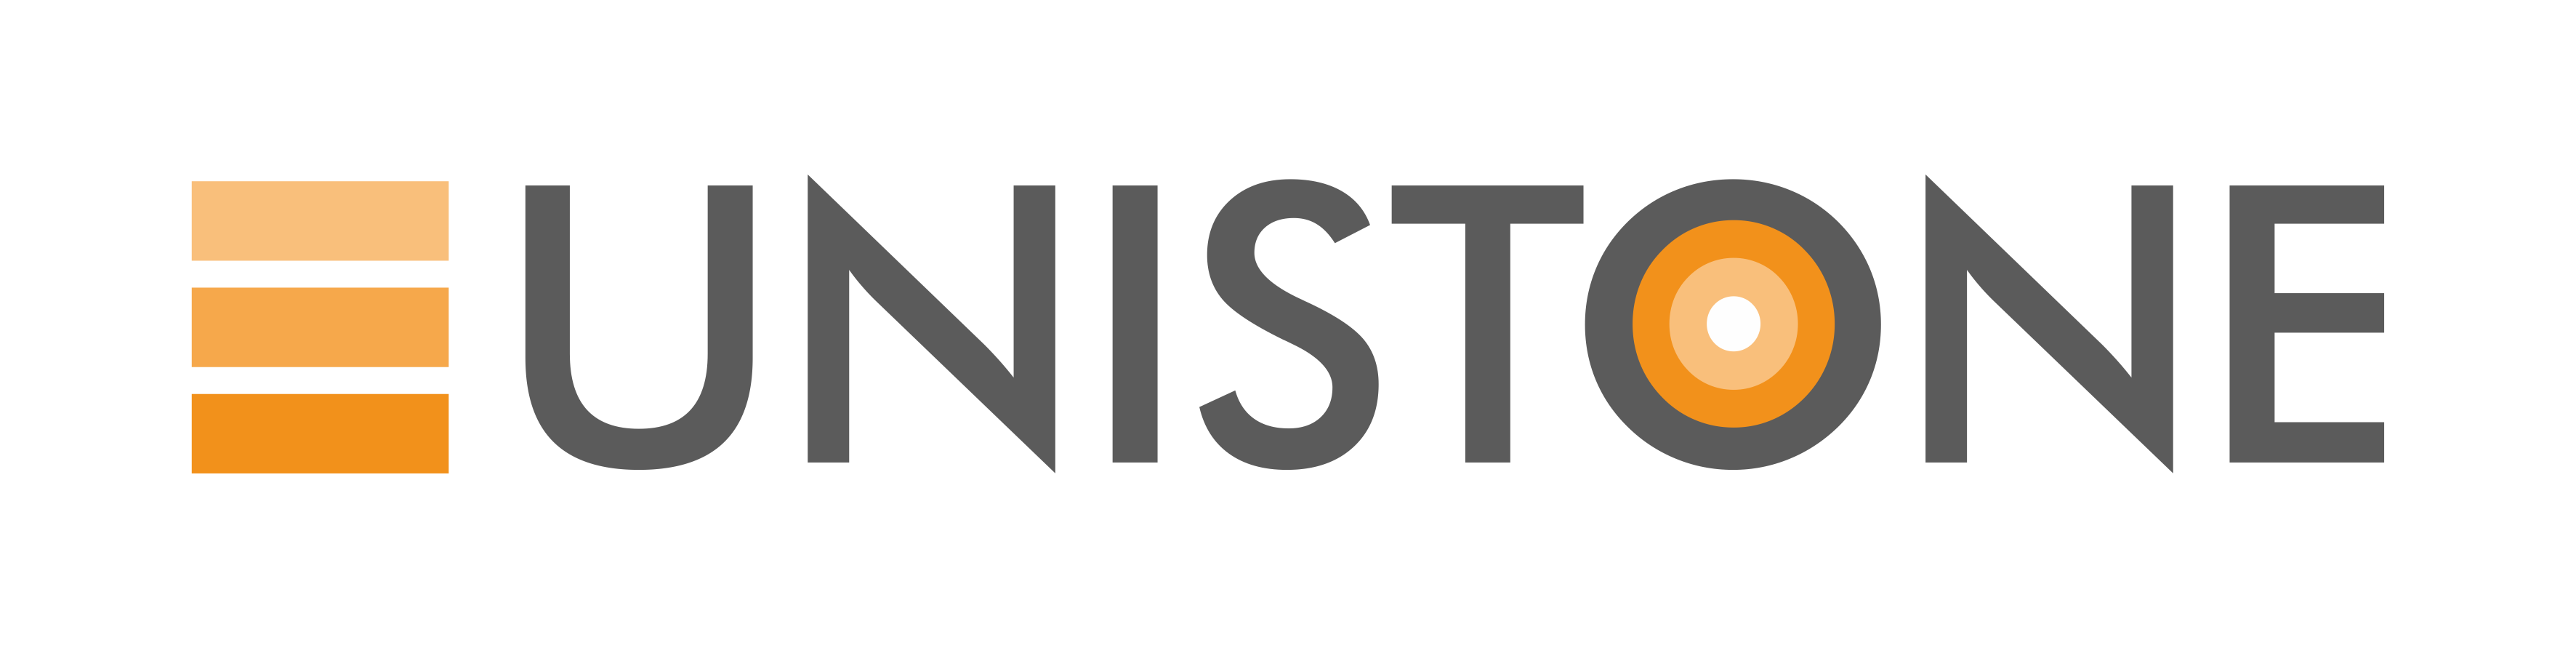 unistone-logo-new